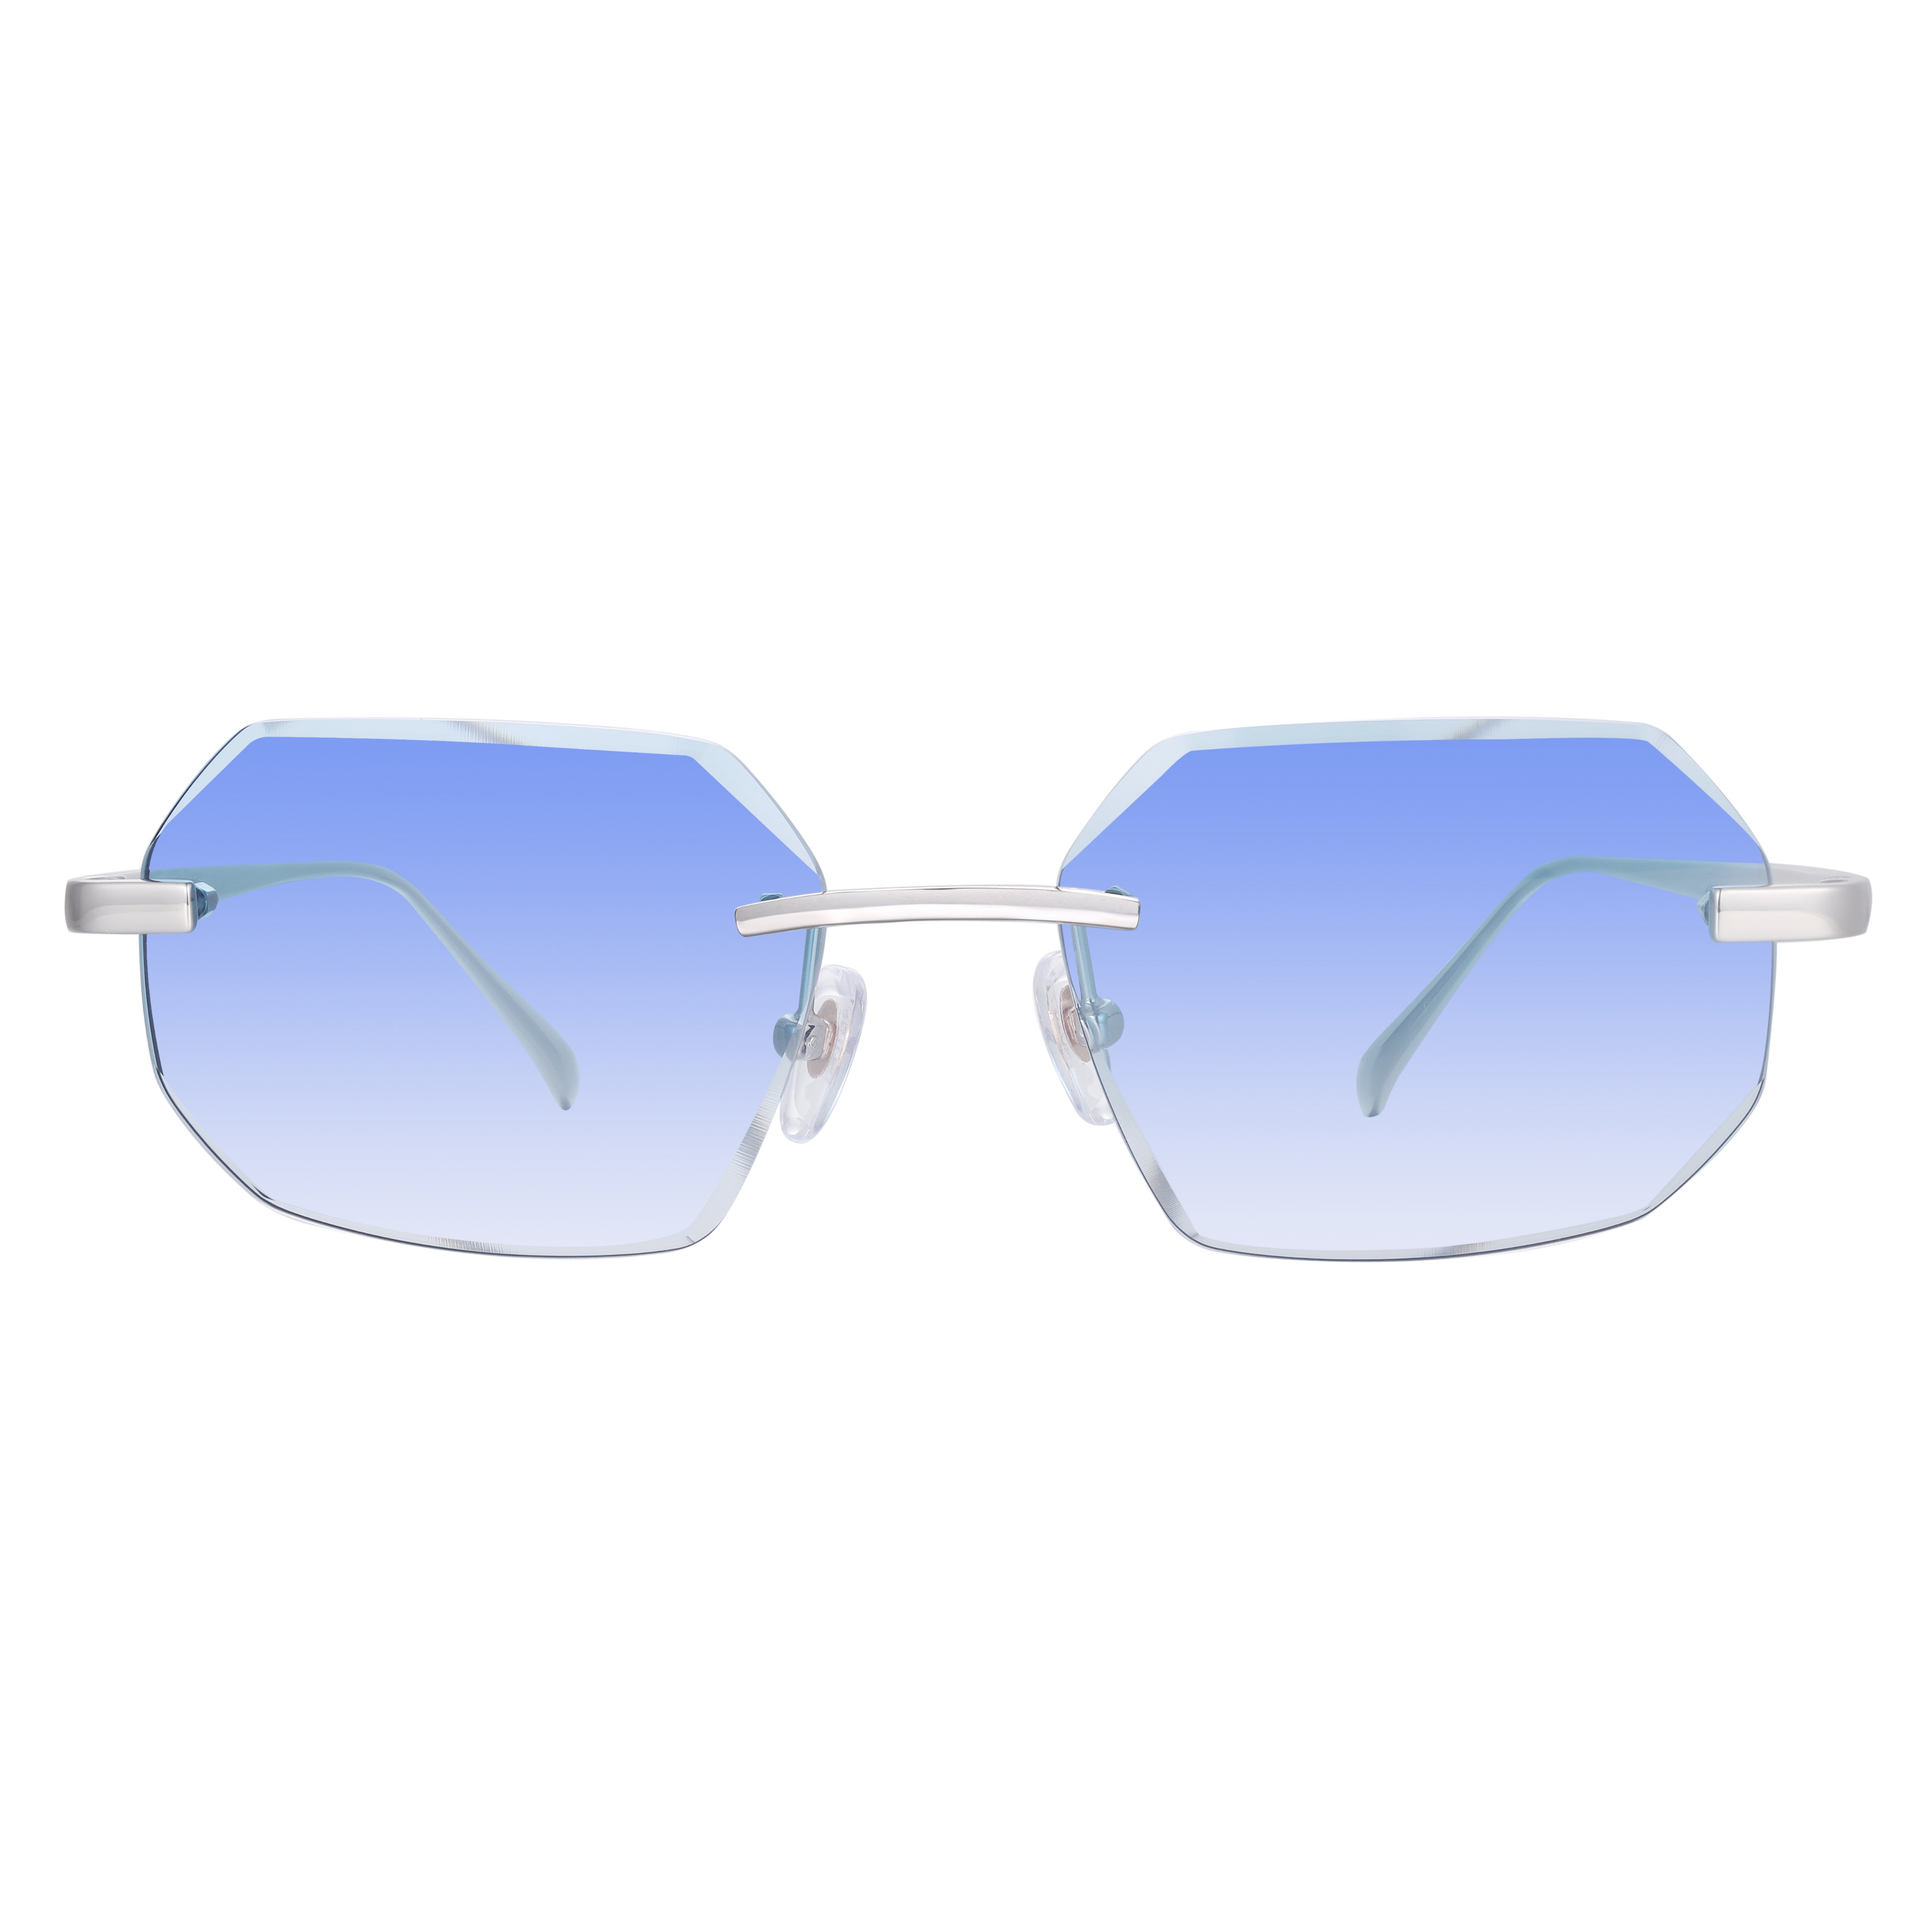 ASTOS Women's Eyewear Silver Diamond Cut Glasses Sky Blue - Transparen